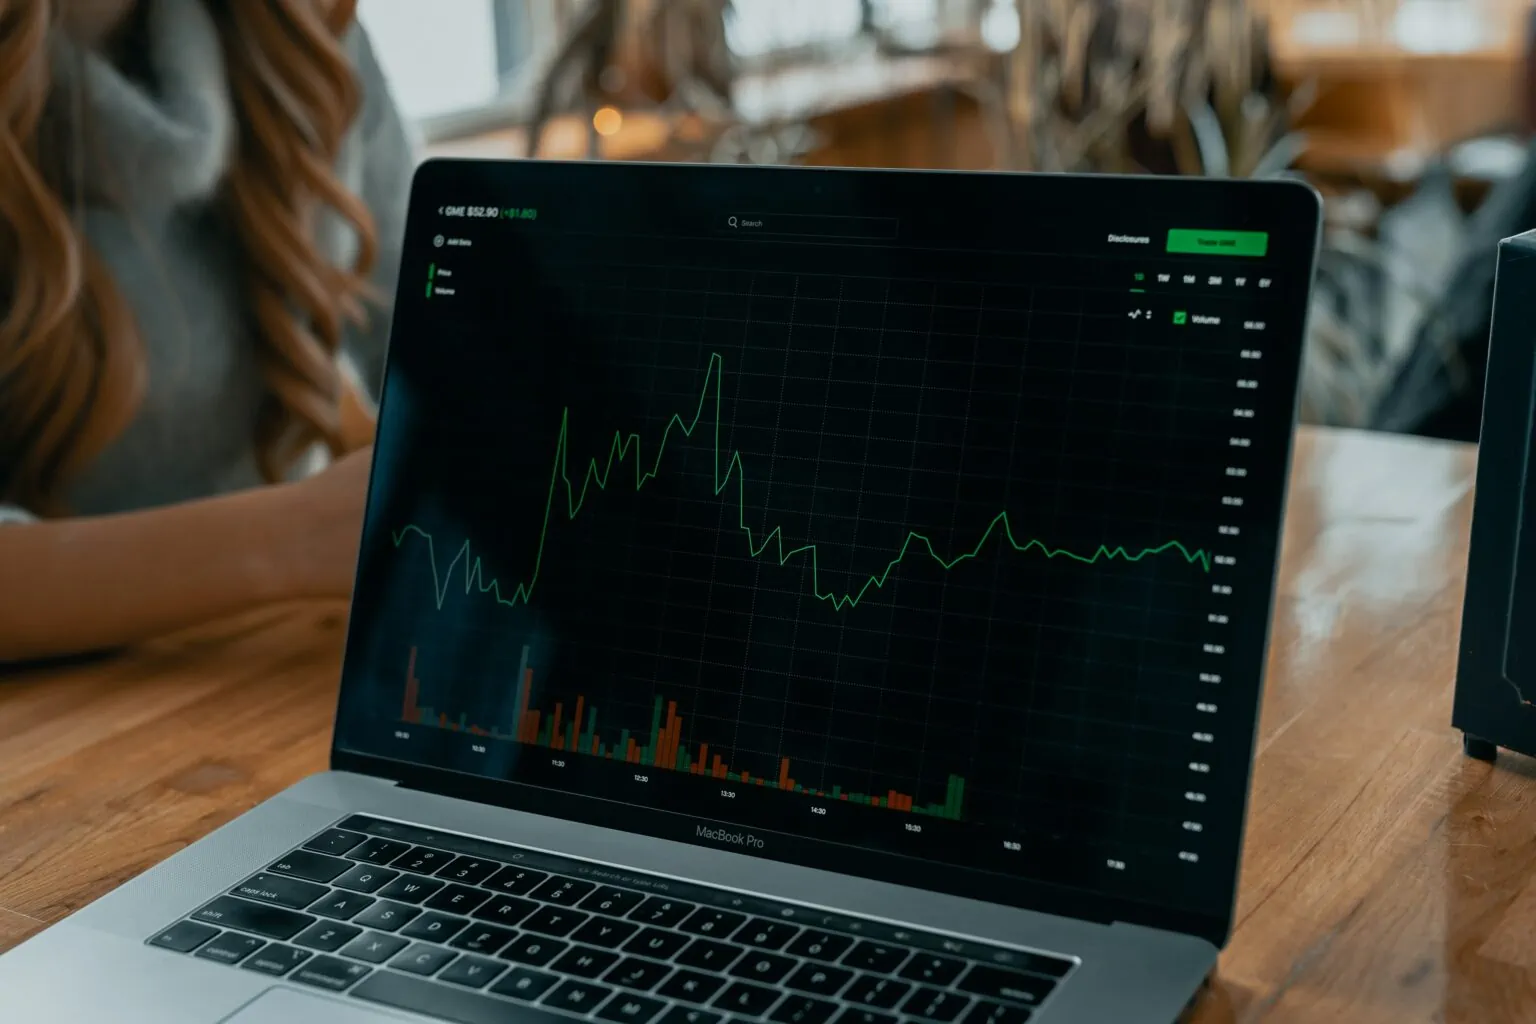 A MacBook Pro displays a stock market graph